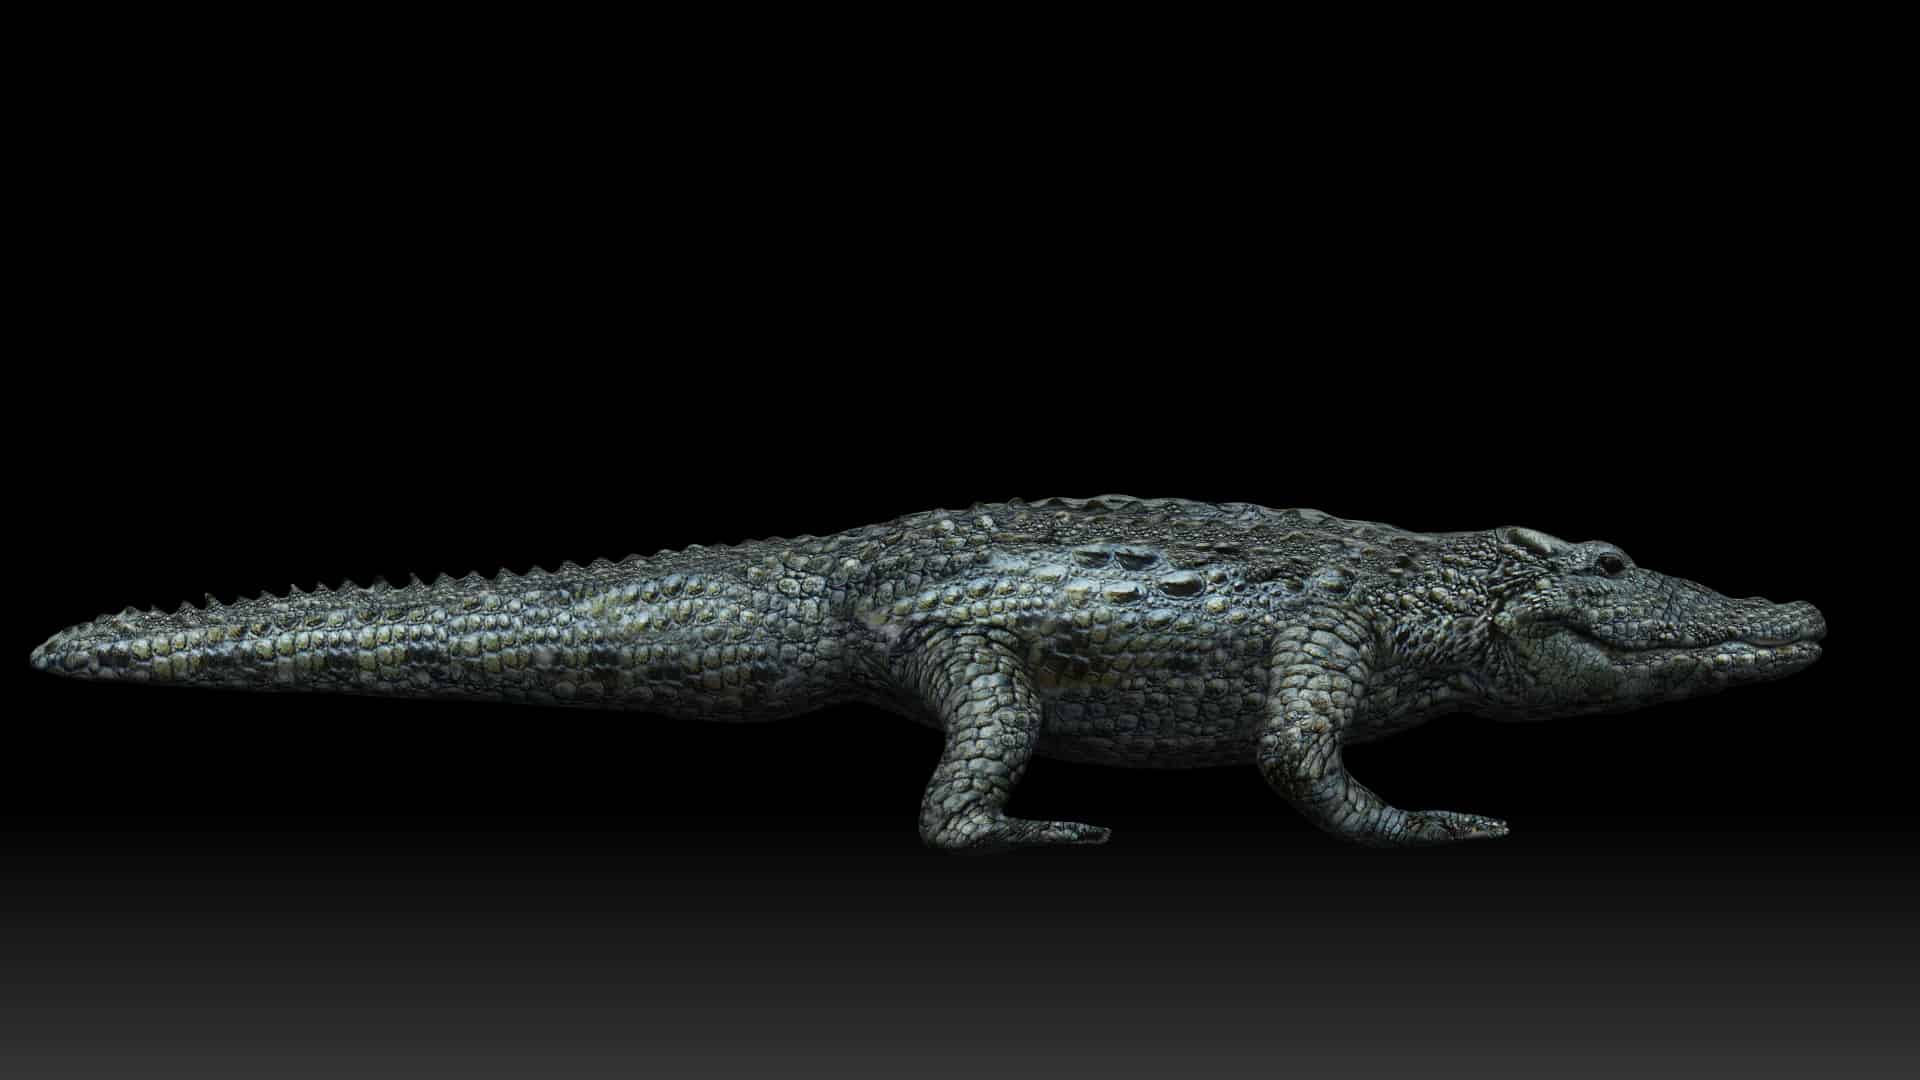 https://team3dyard.com/wp-content/uploads/2021/06/Alligator-3d-model-7.jpg